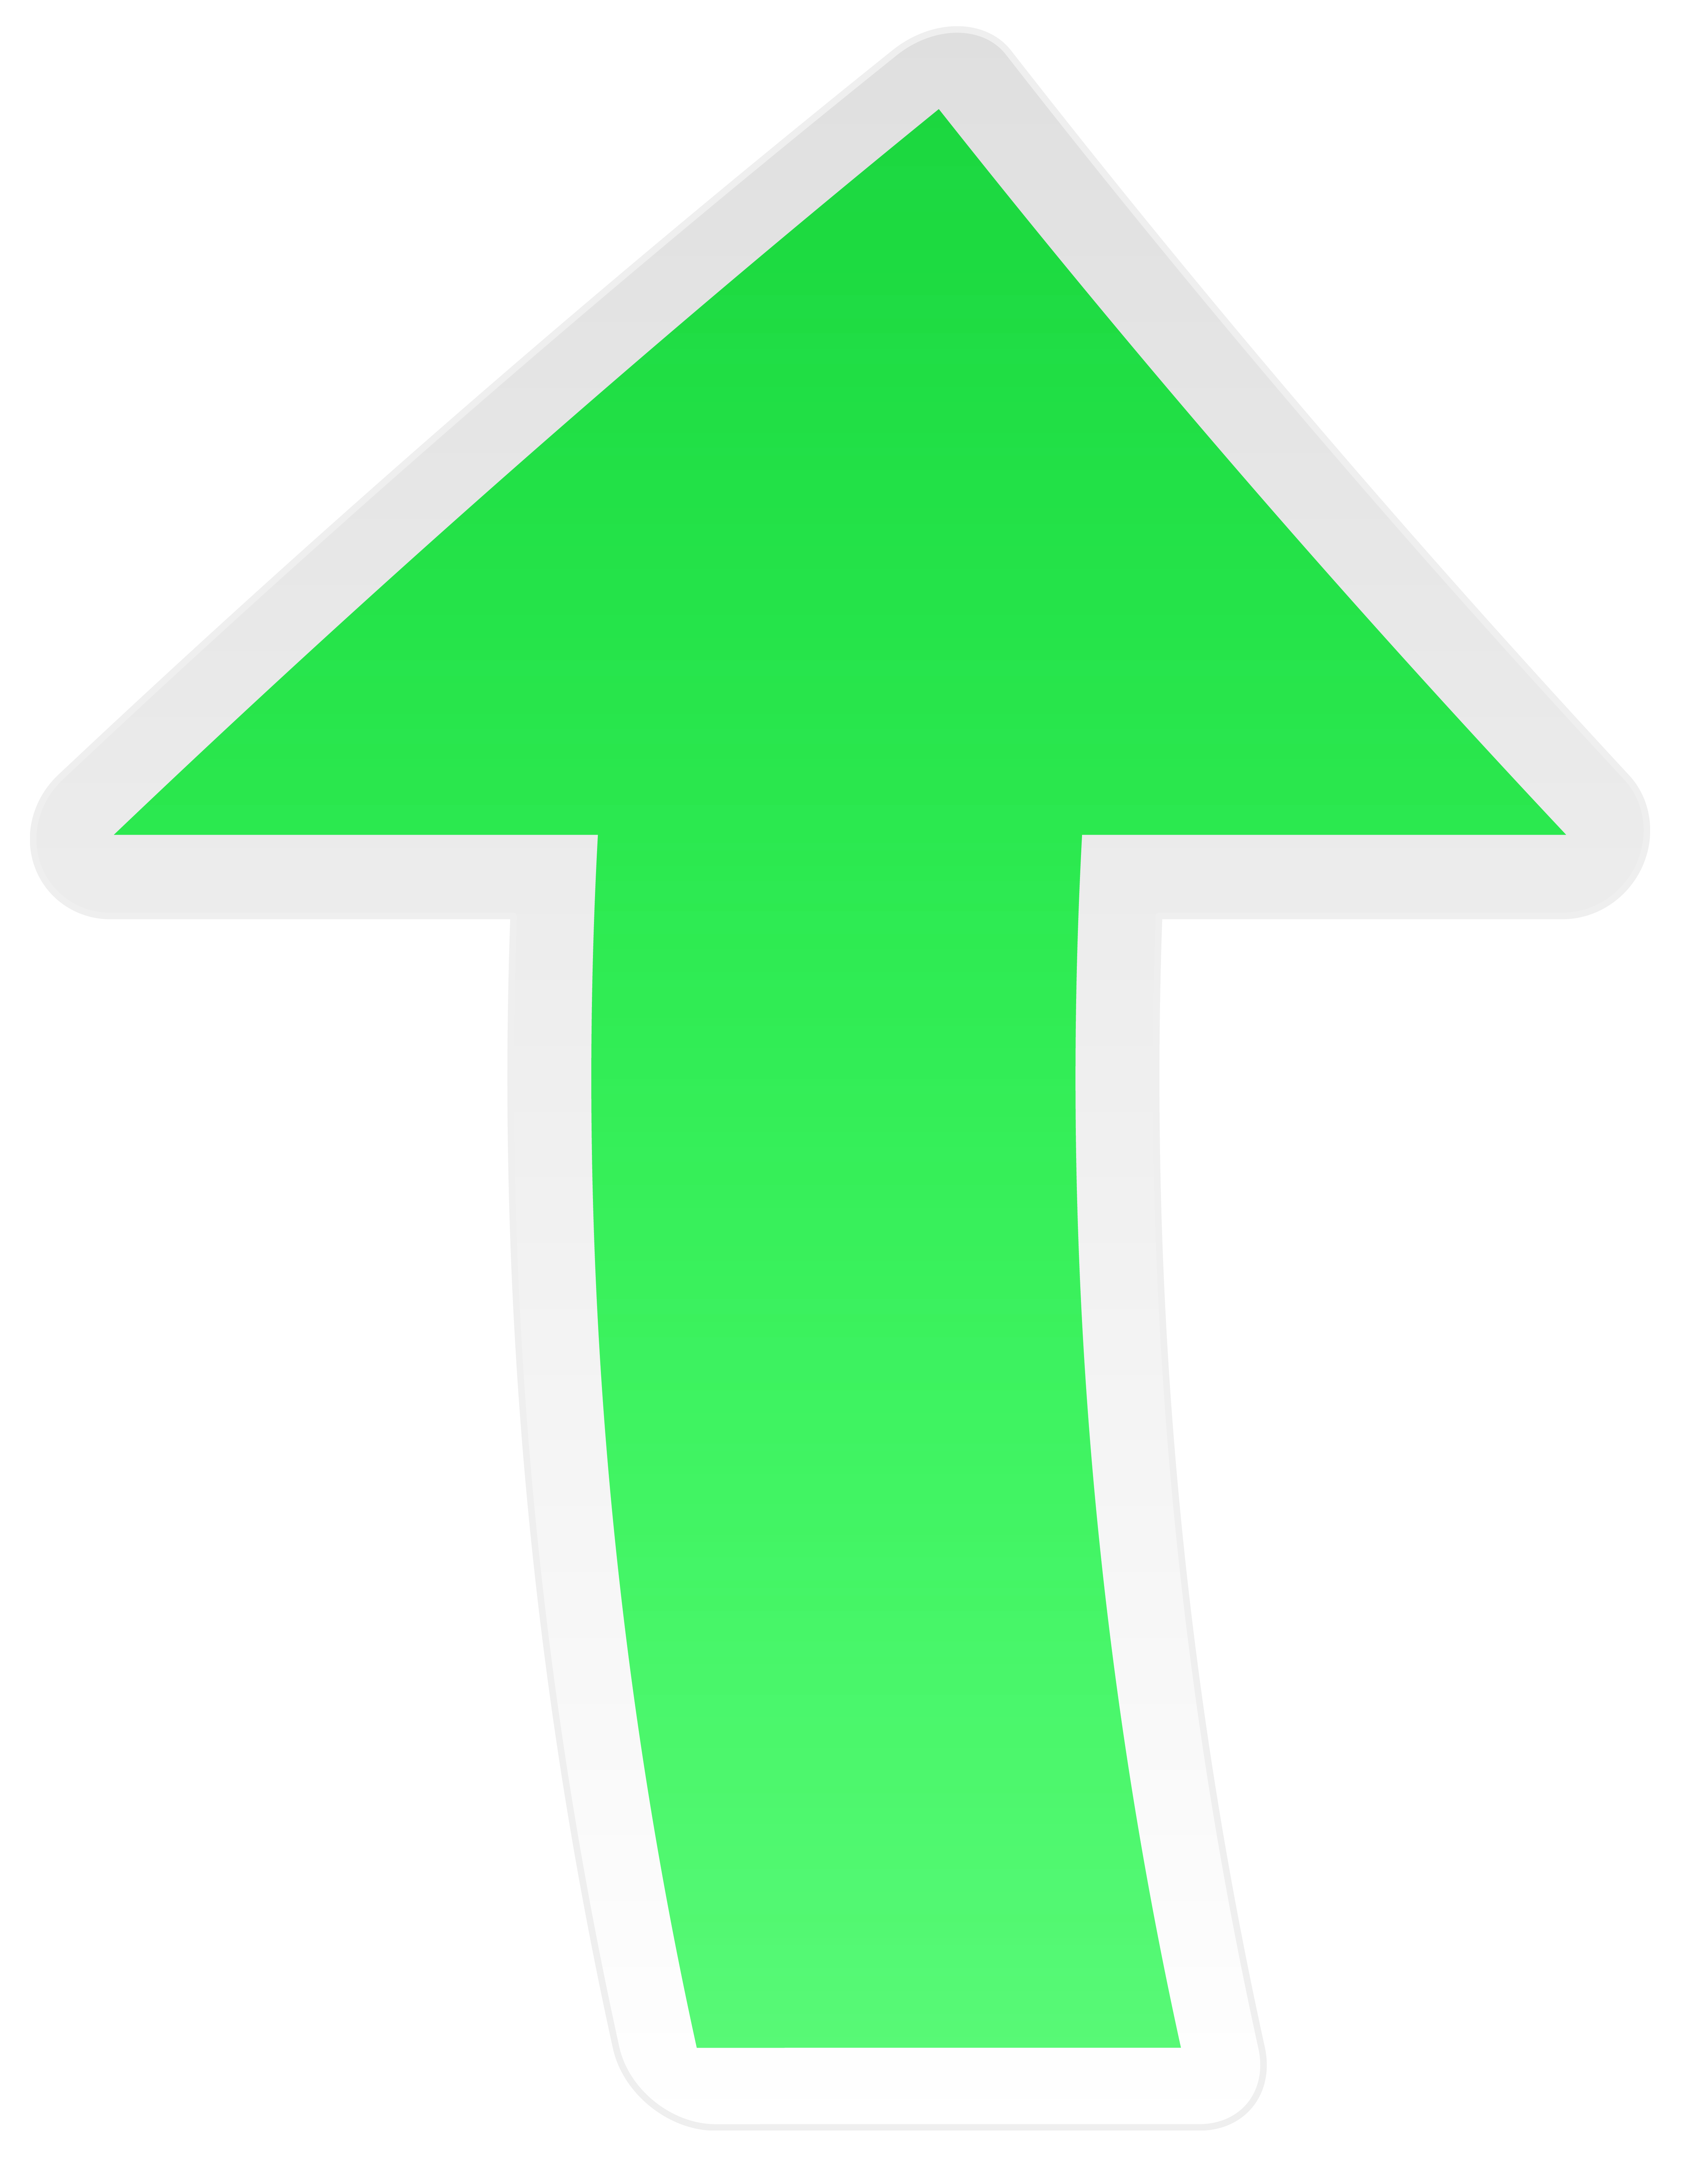 Green Arrow Up Transparent PNG Clip Art Image